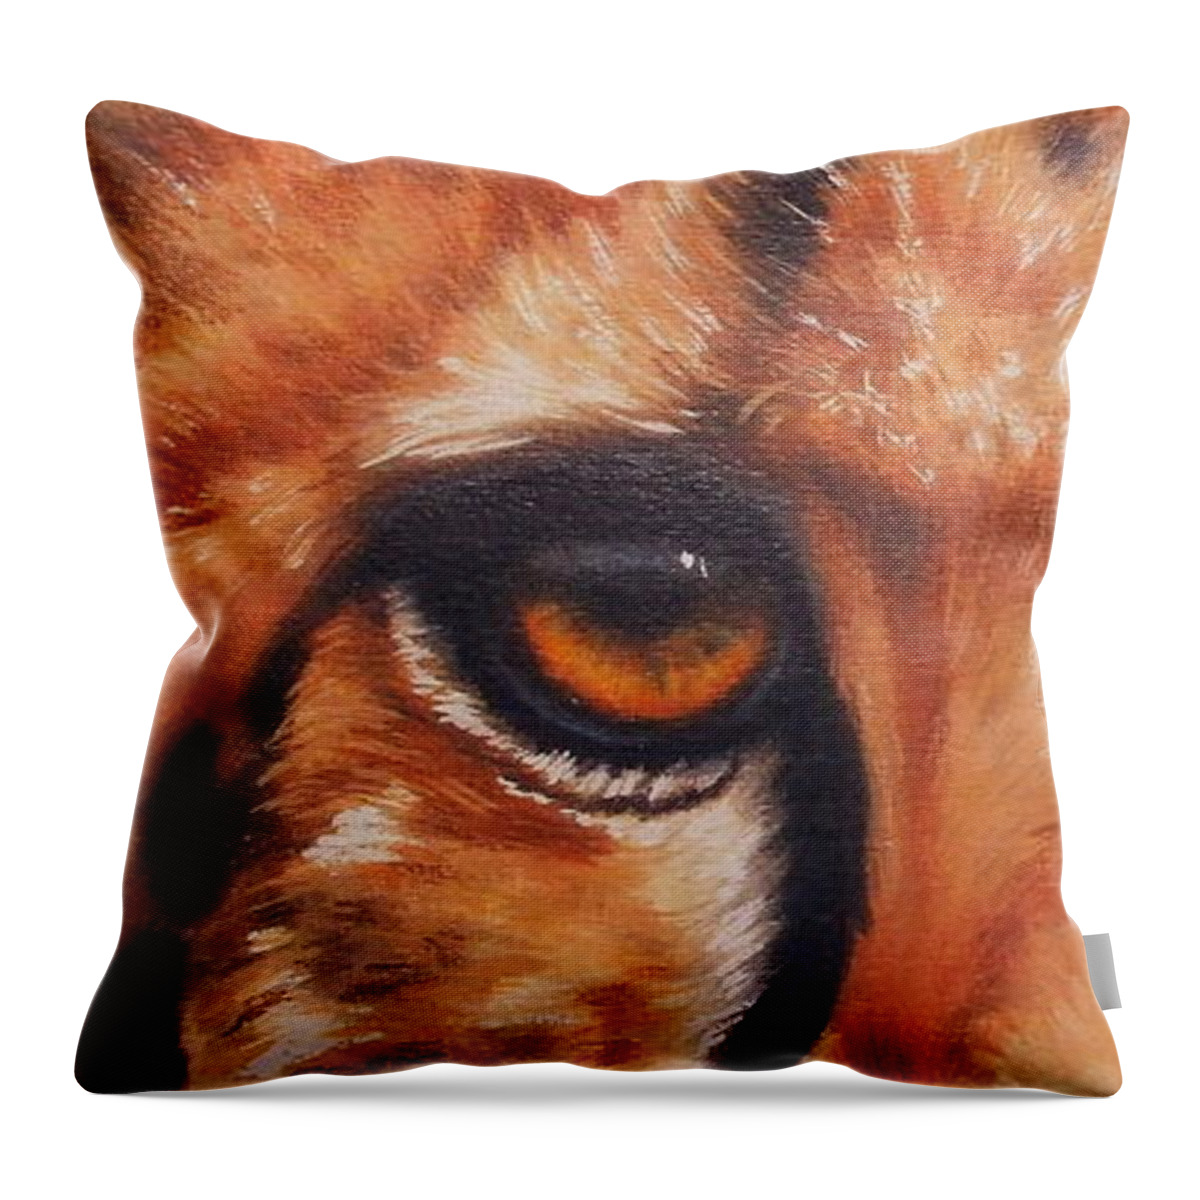 Panthera Throw Pillow featuring the painting Cheetah Gaze by Barbara Keith